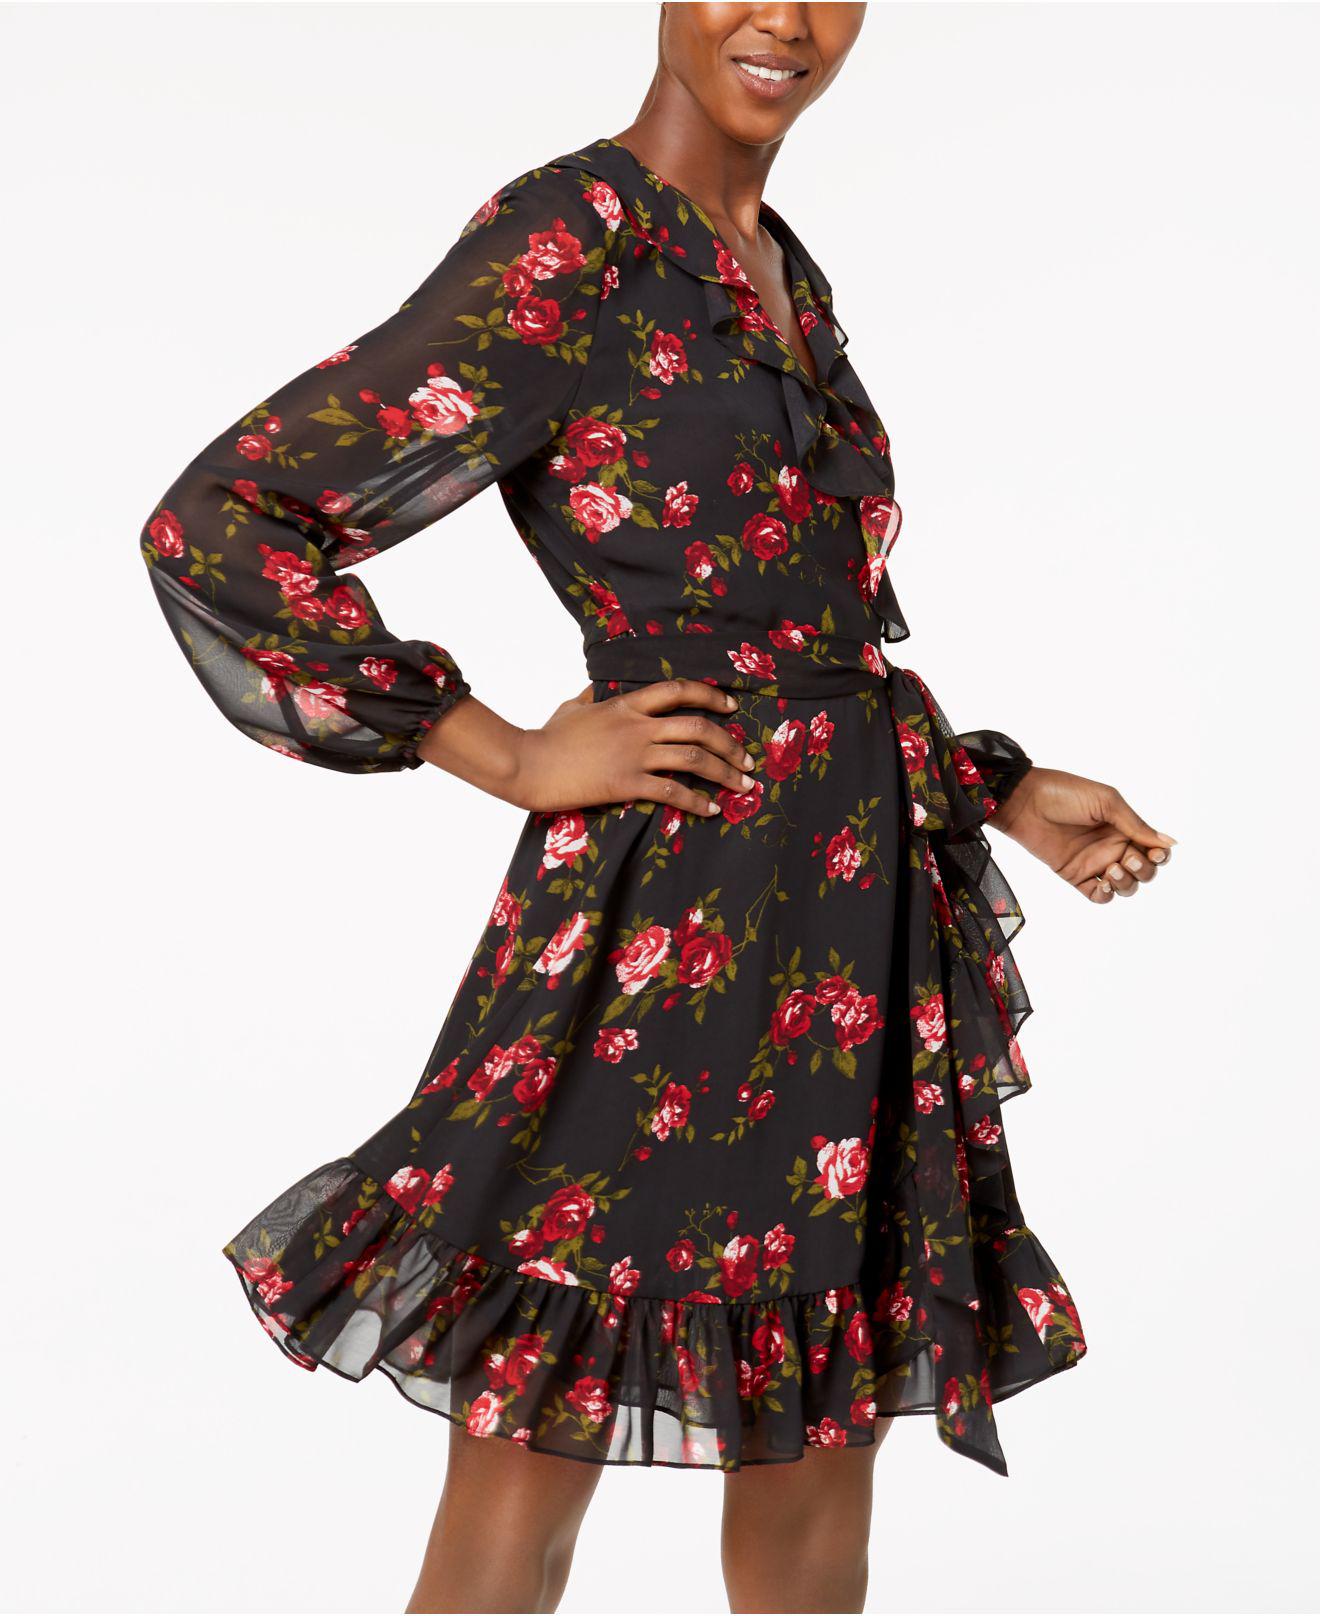 Nine West Dresses Macy's Online Deals ...